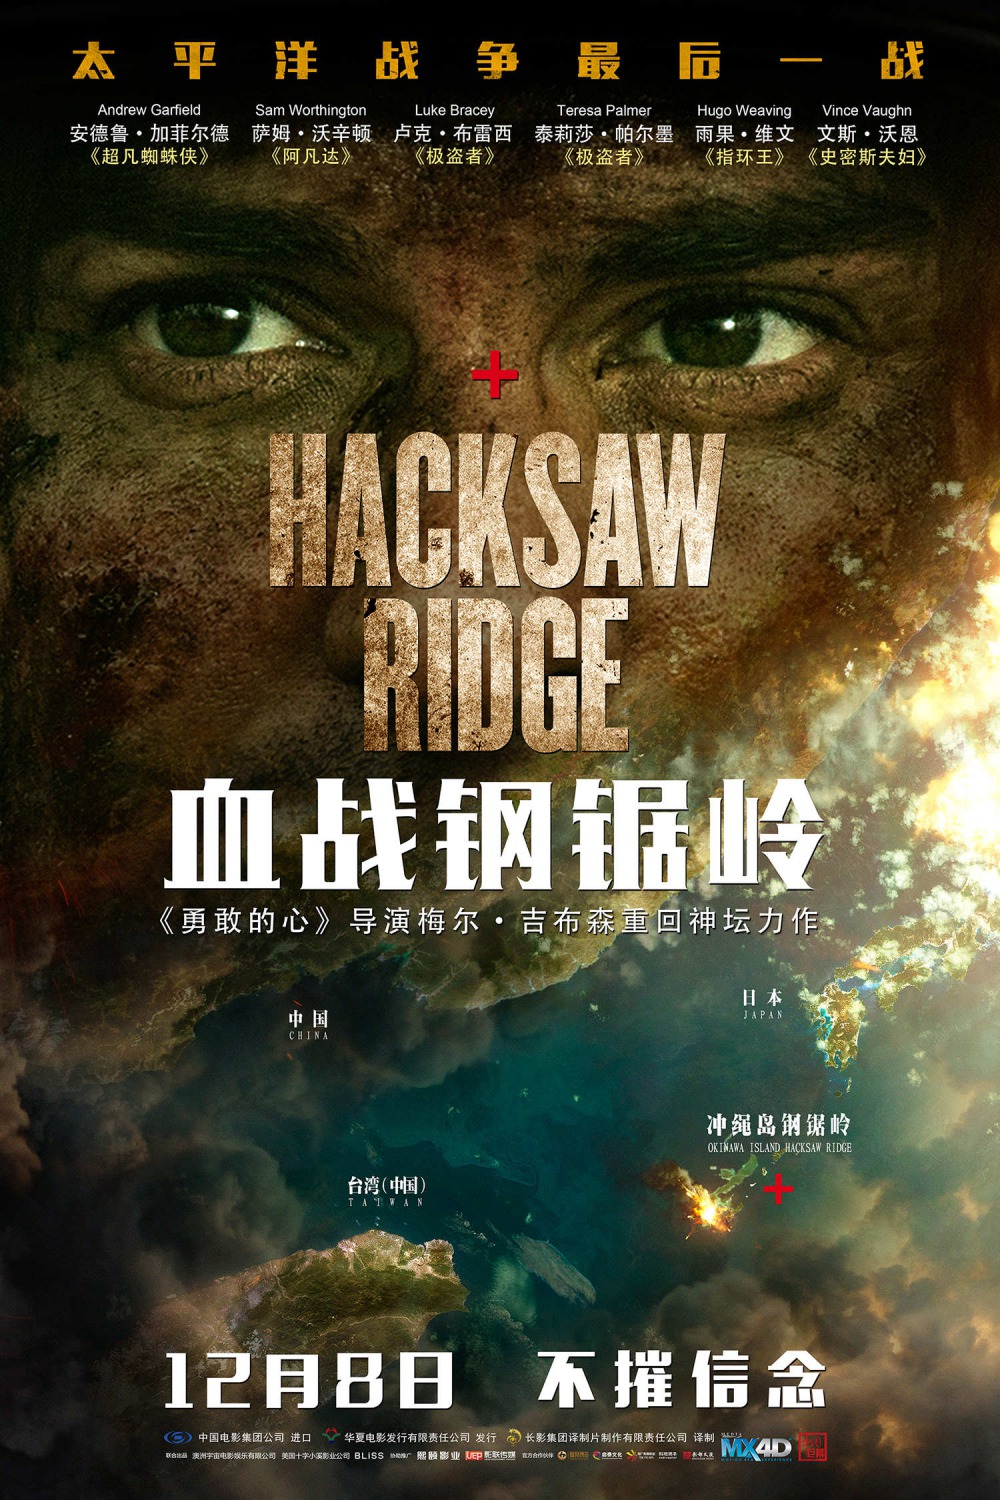 Extra Large Movie Poster Image for Hacksaw Ridge (#17 of 19)